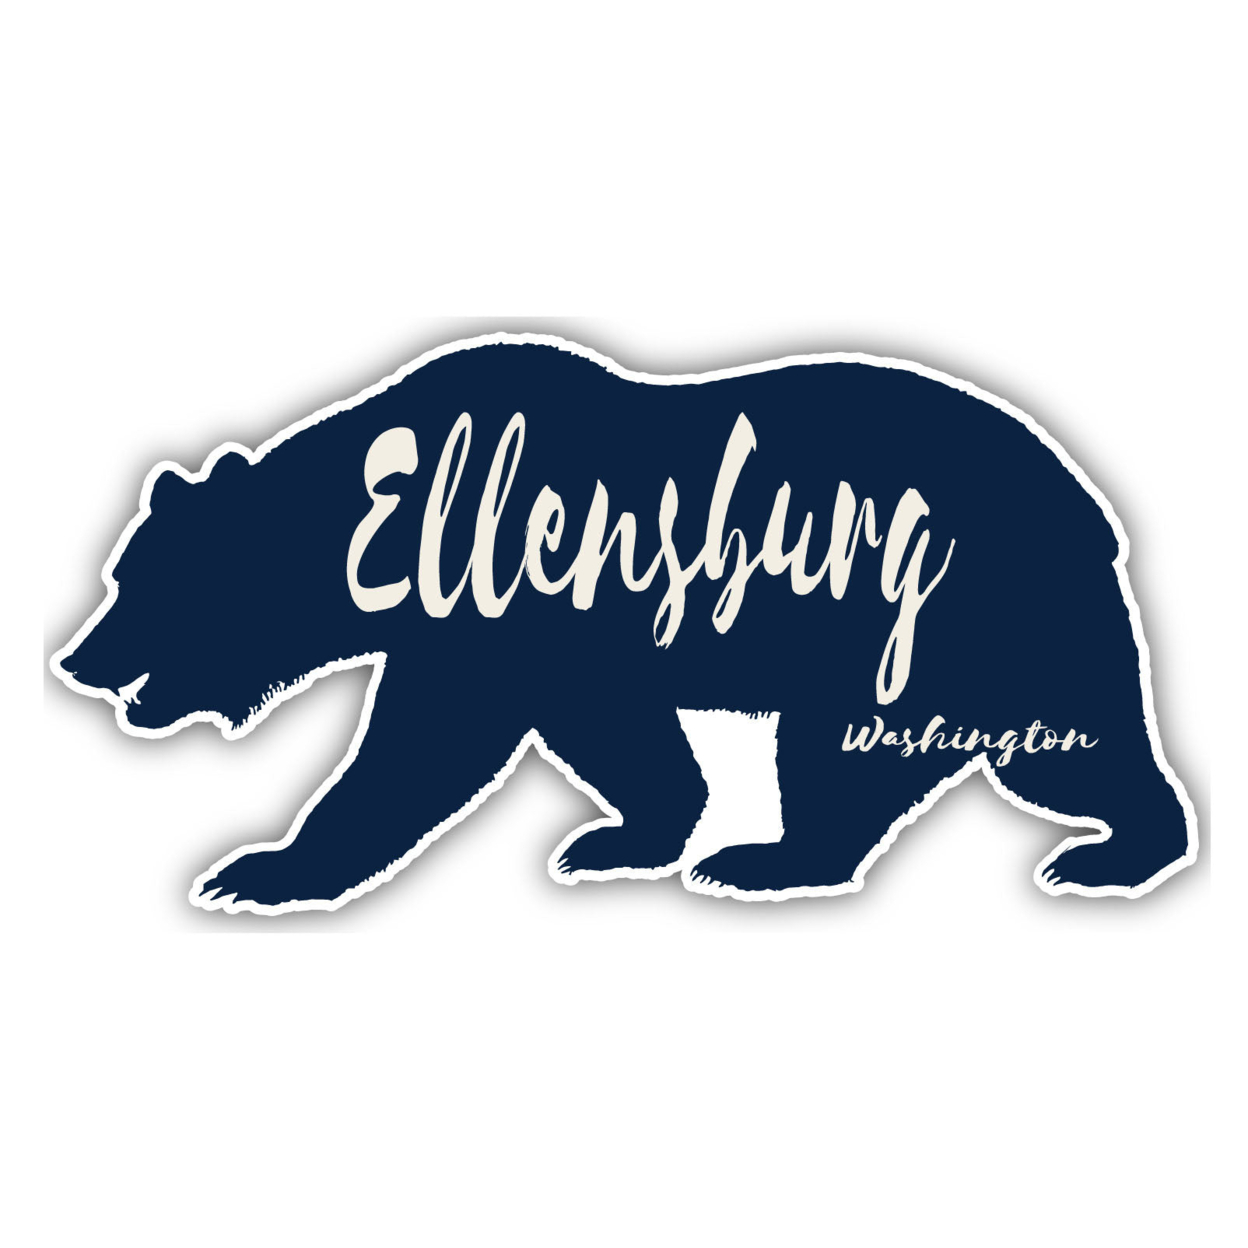 Ellensburg Washington Souvenir Decorative Stickers (Choose Theme And Size) - Single Unit, 2-Inch, Great Outdoors